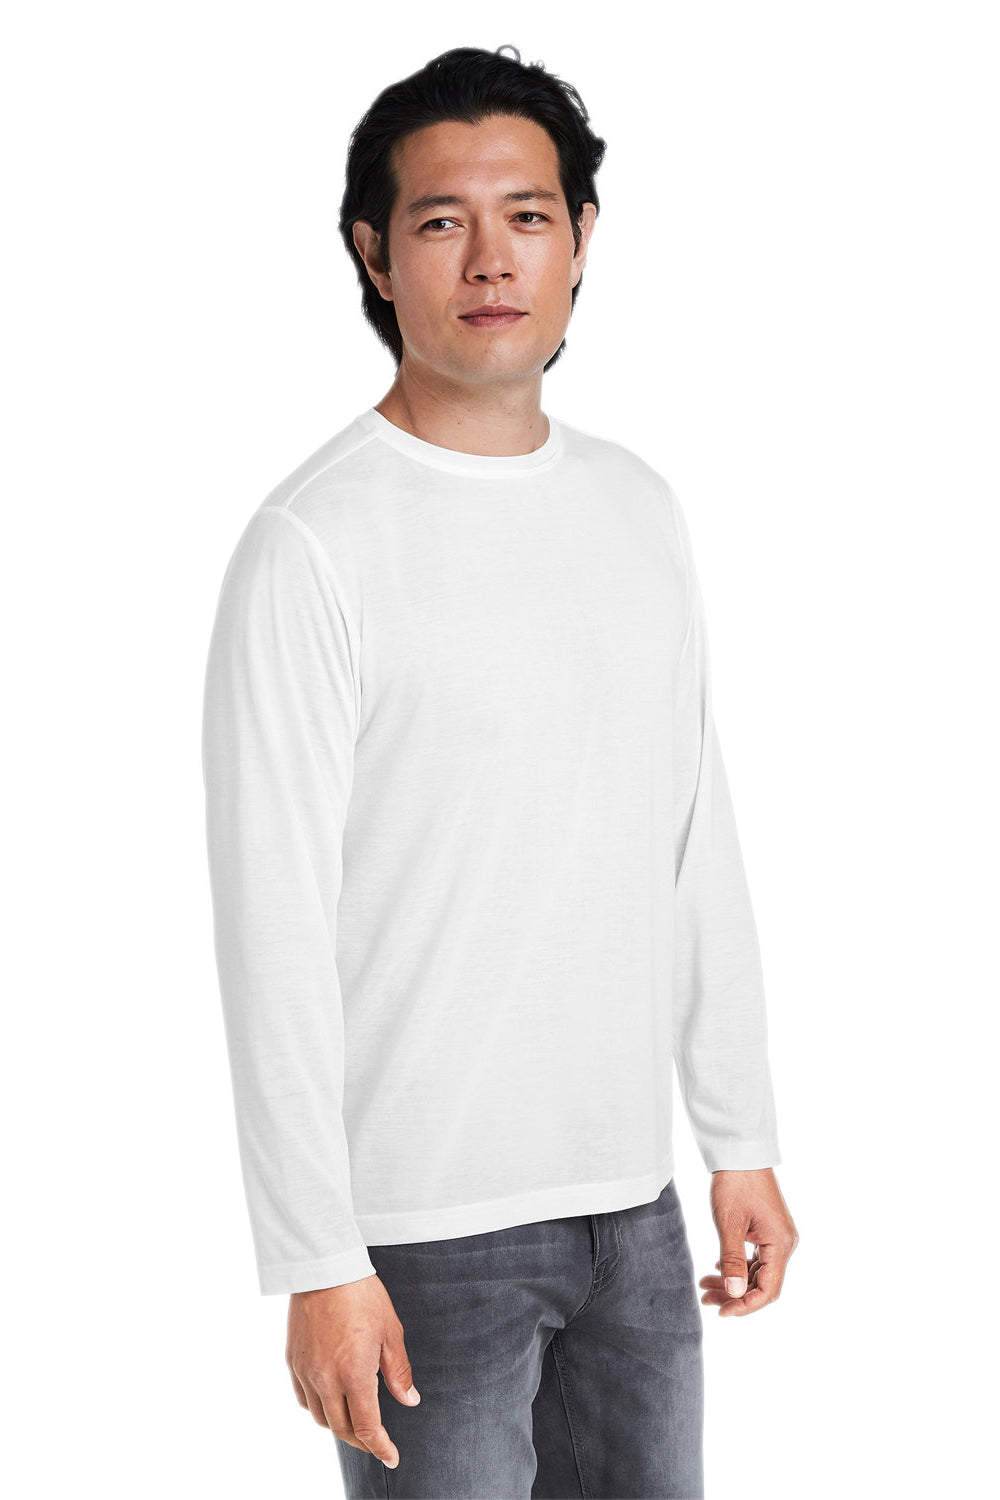 Core 365 CE111L Mens Fusion ChromaSoft Performance Moisture Wicking Long Sleeve Crewneck T-Shirt White 3Q